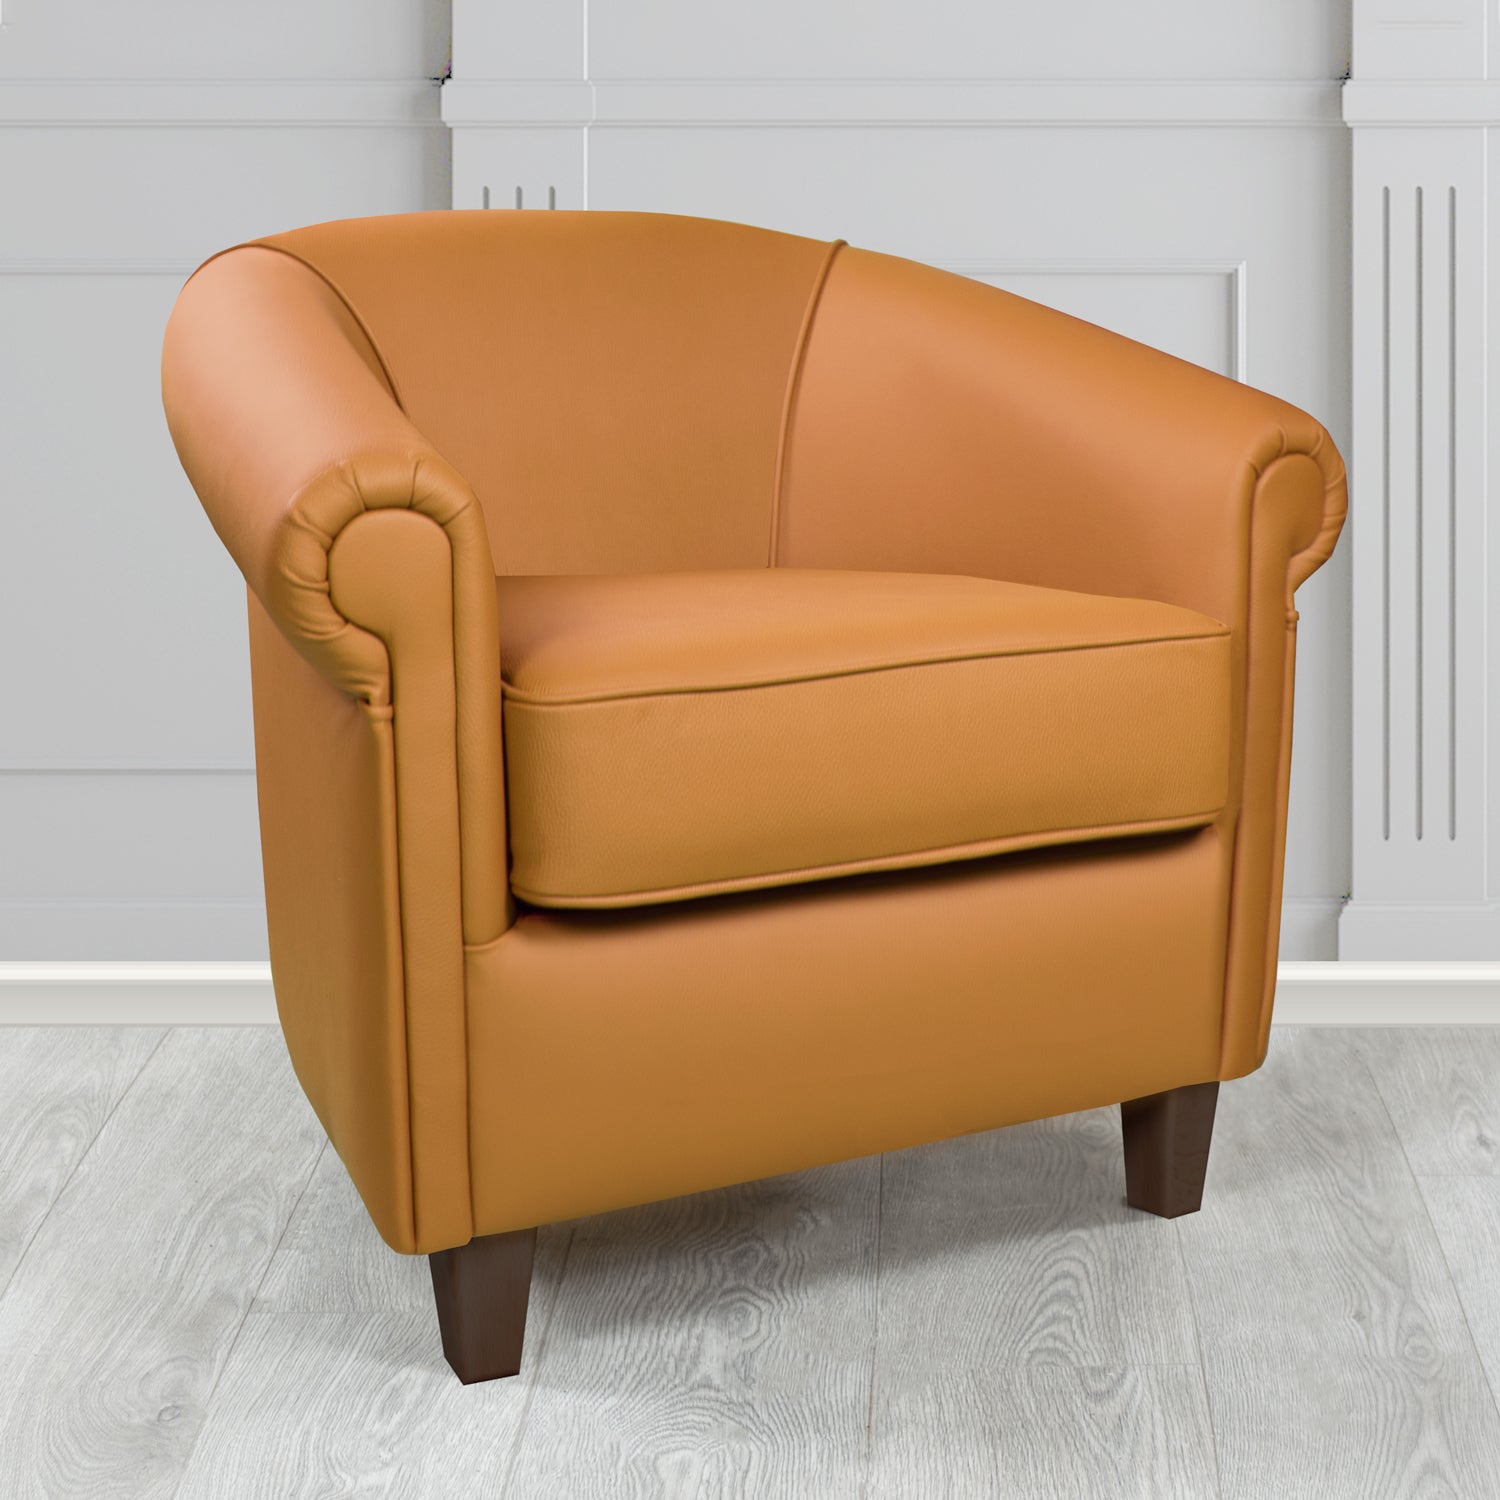 Siena Tub Chair in Crib 5 Shelly Saddle Genuine Leather - The Tub Chair Shop